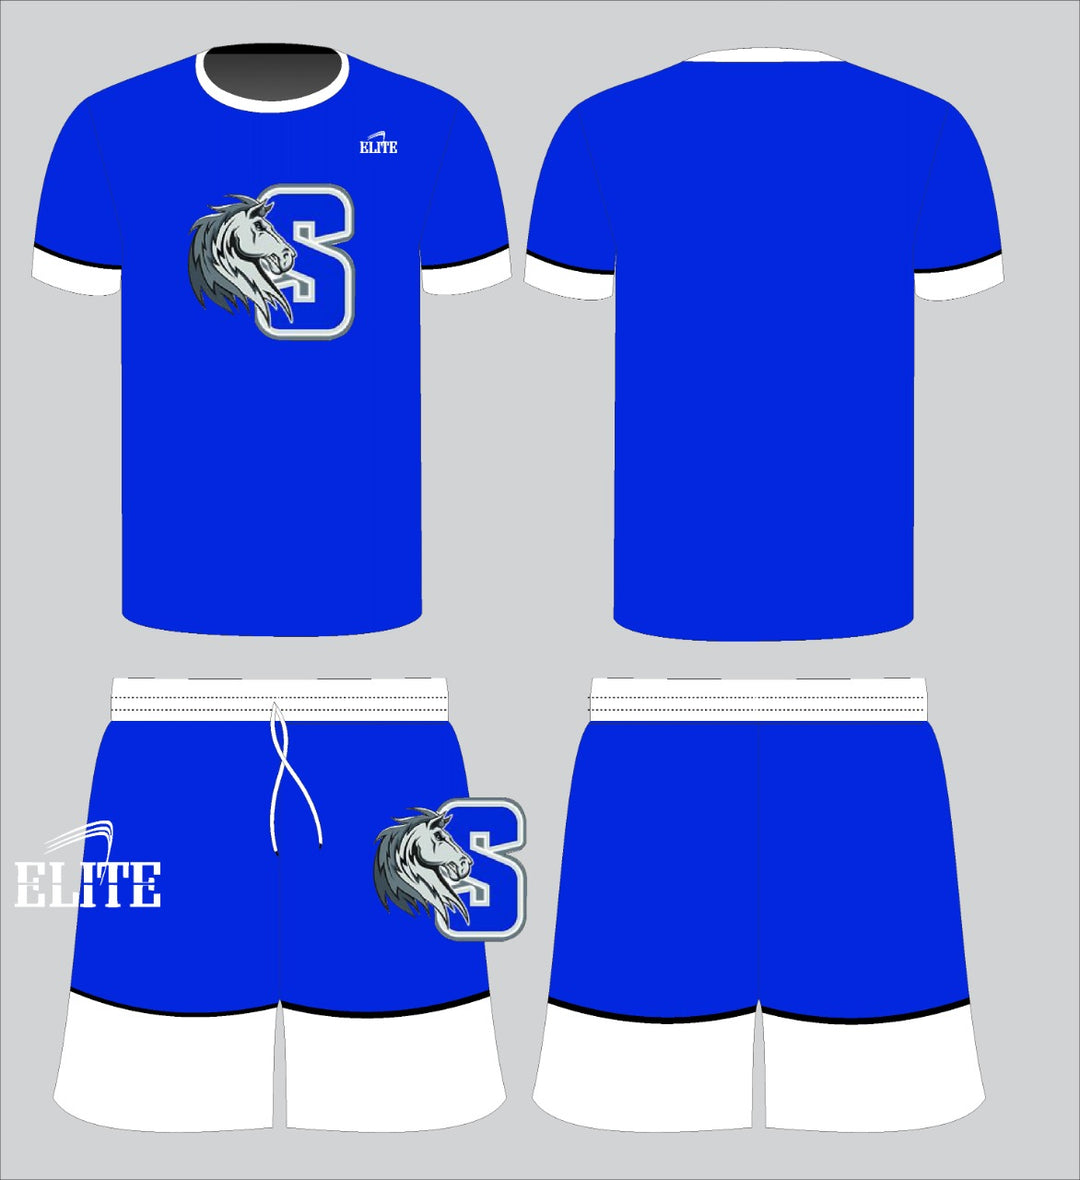 Scotlandville Middle - Blue - White - Workout Set